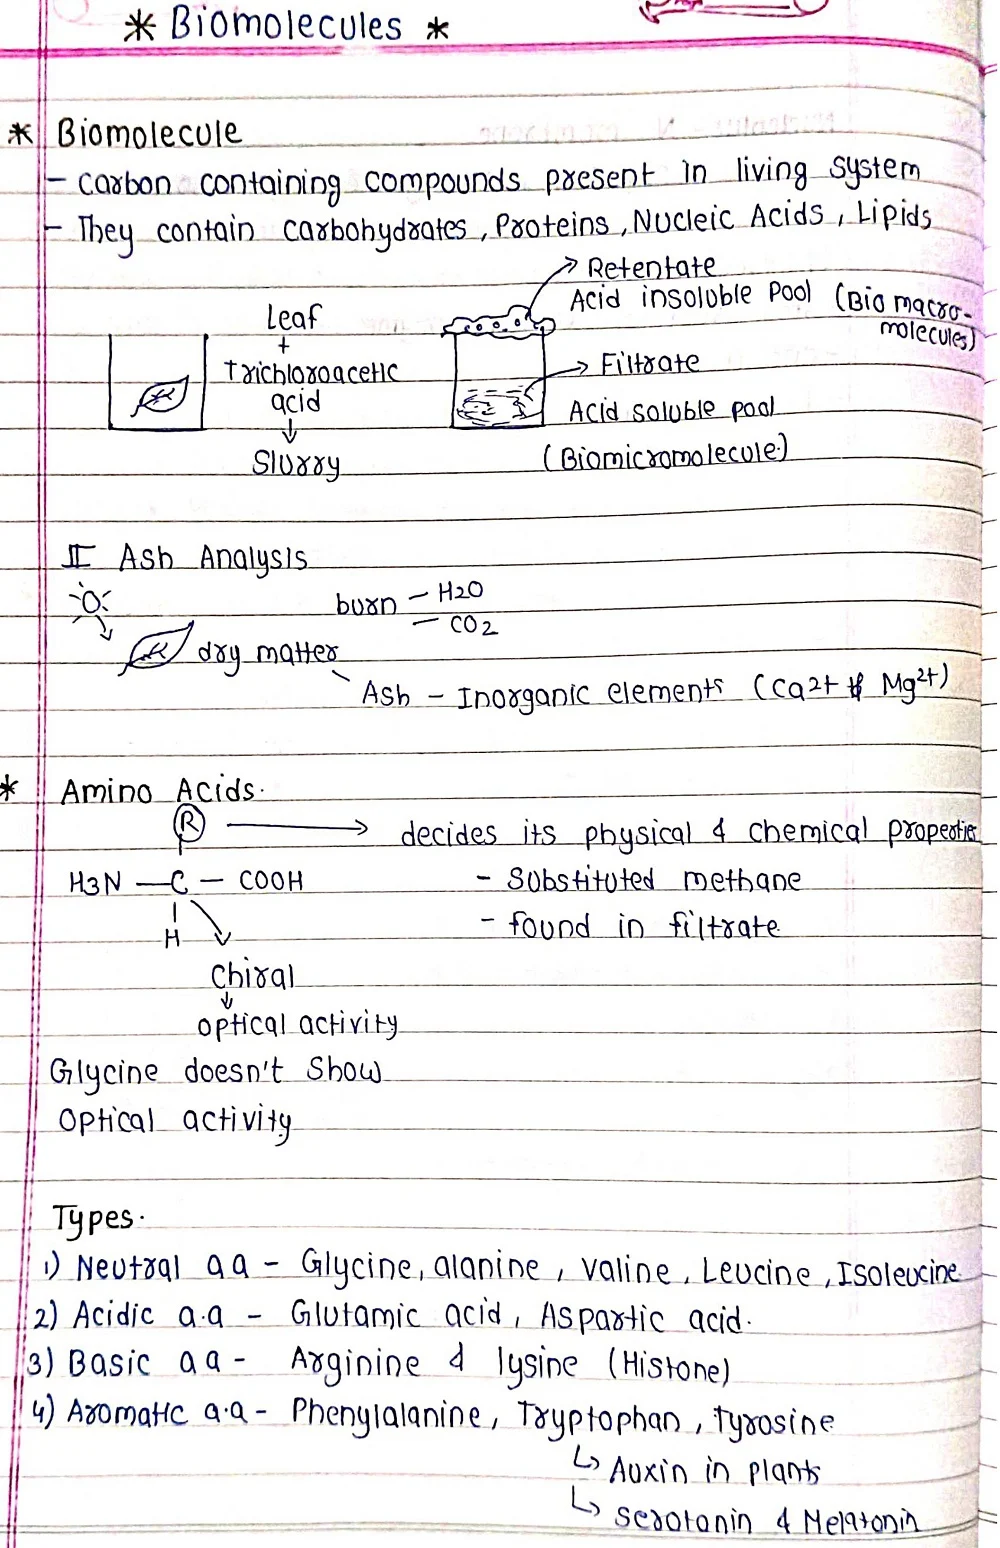 Biomolecules - Biology Short Notes 📚